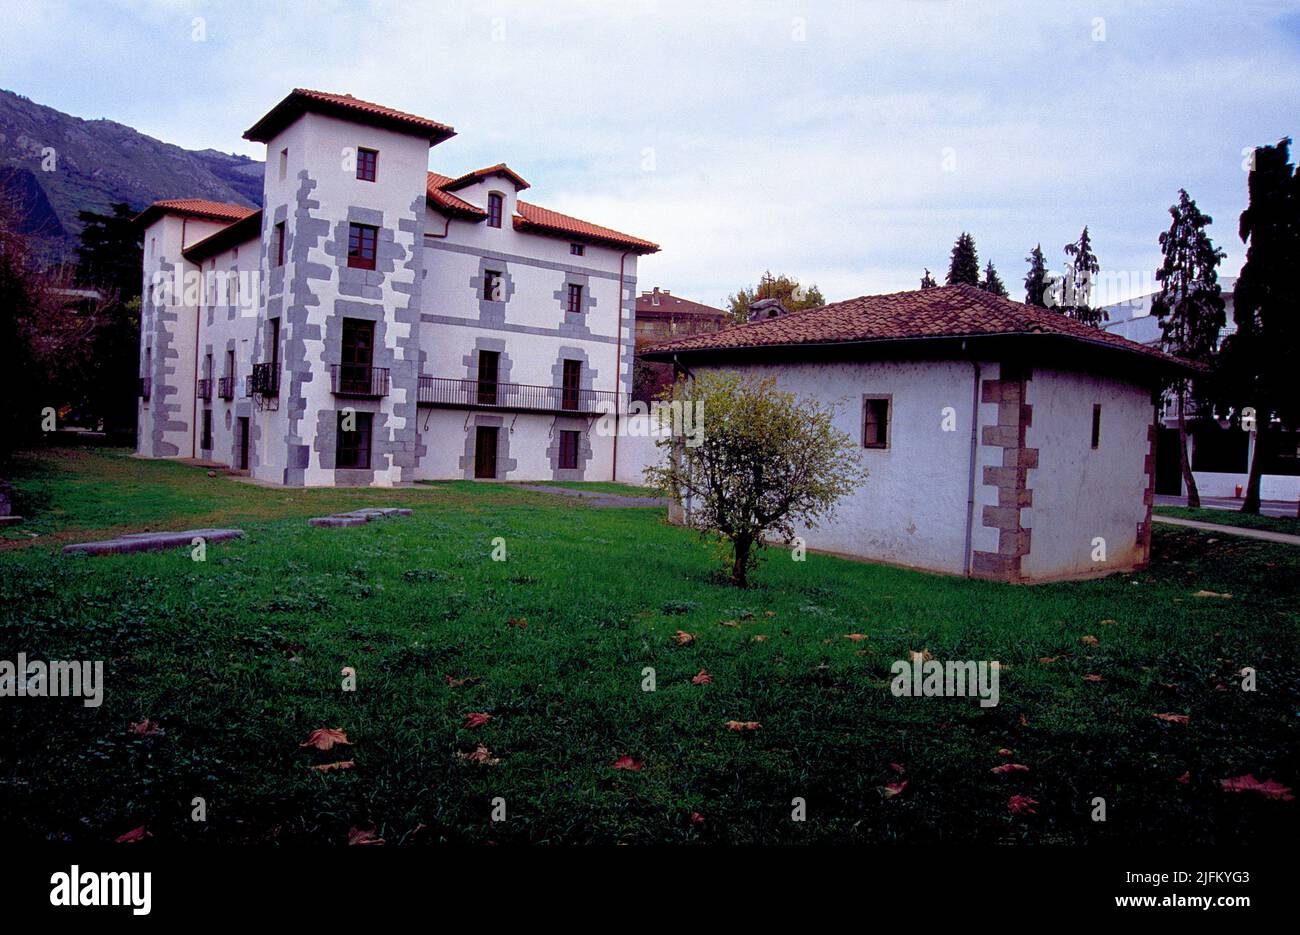 Insausti Palace. Azcoitia, Guipuzcoa province, Basque Country, Spain. Stock Photo